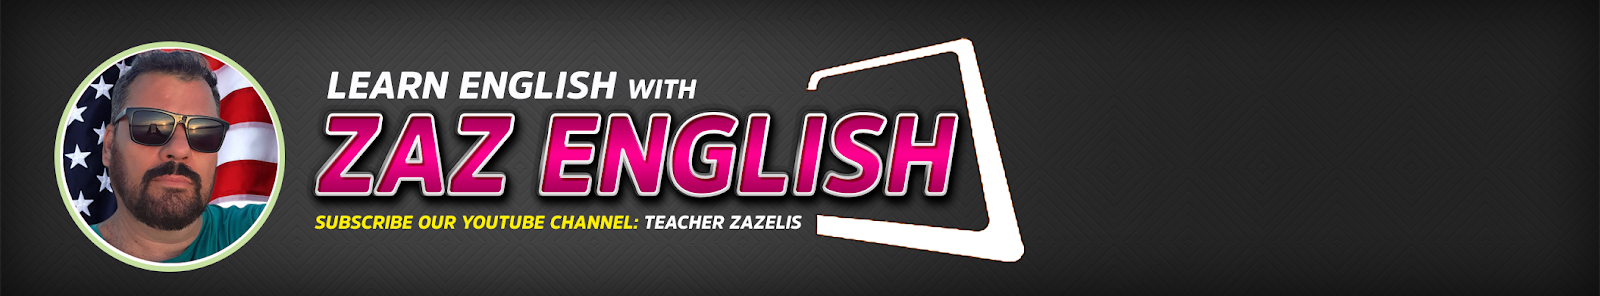 Learn English with Zaz English